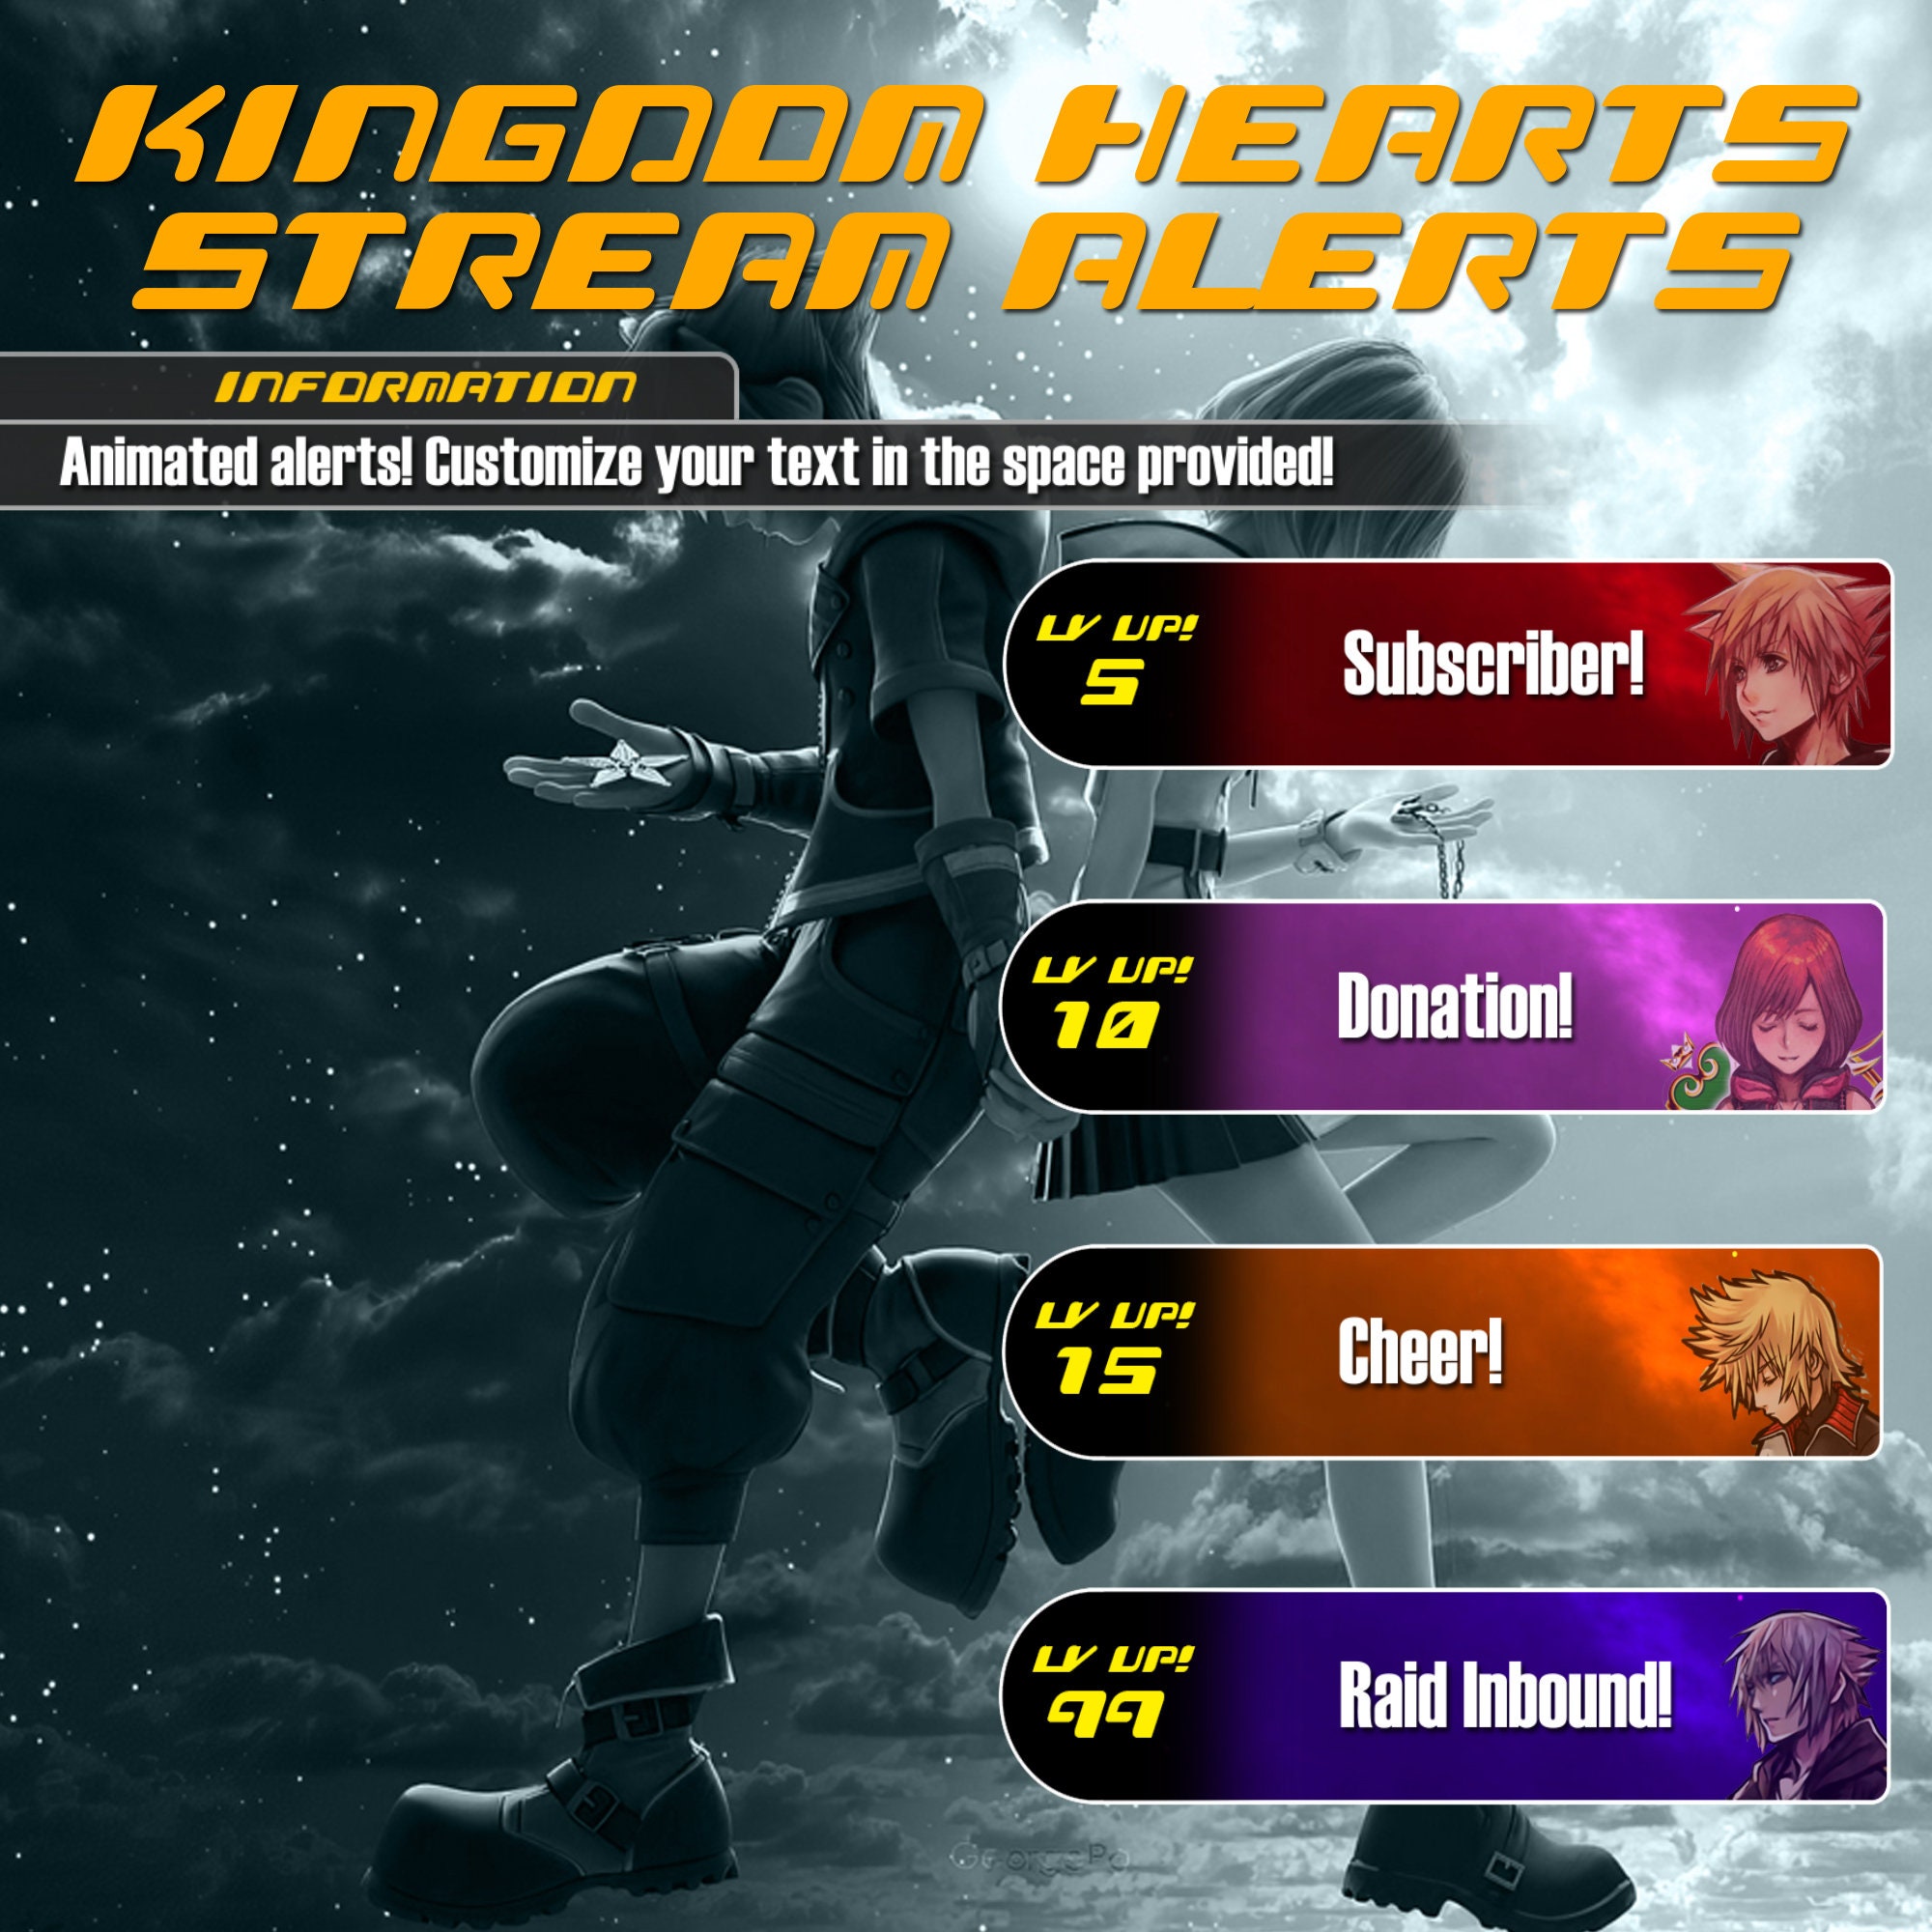 Square enix PS4 Kingdom Hearts 3 Import PAL Multicolor